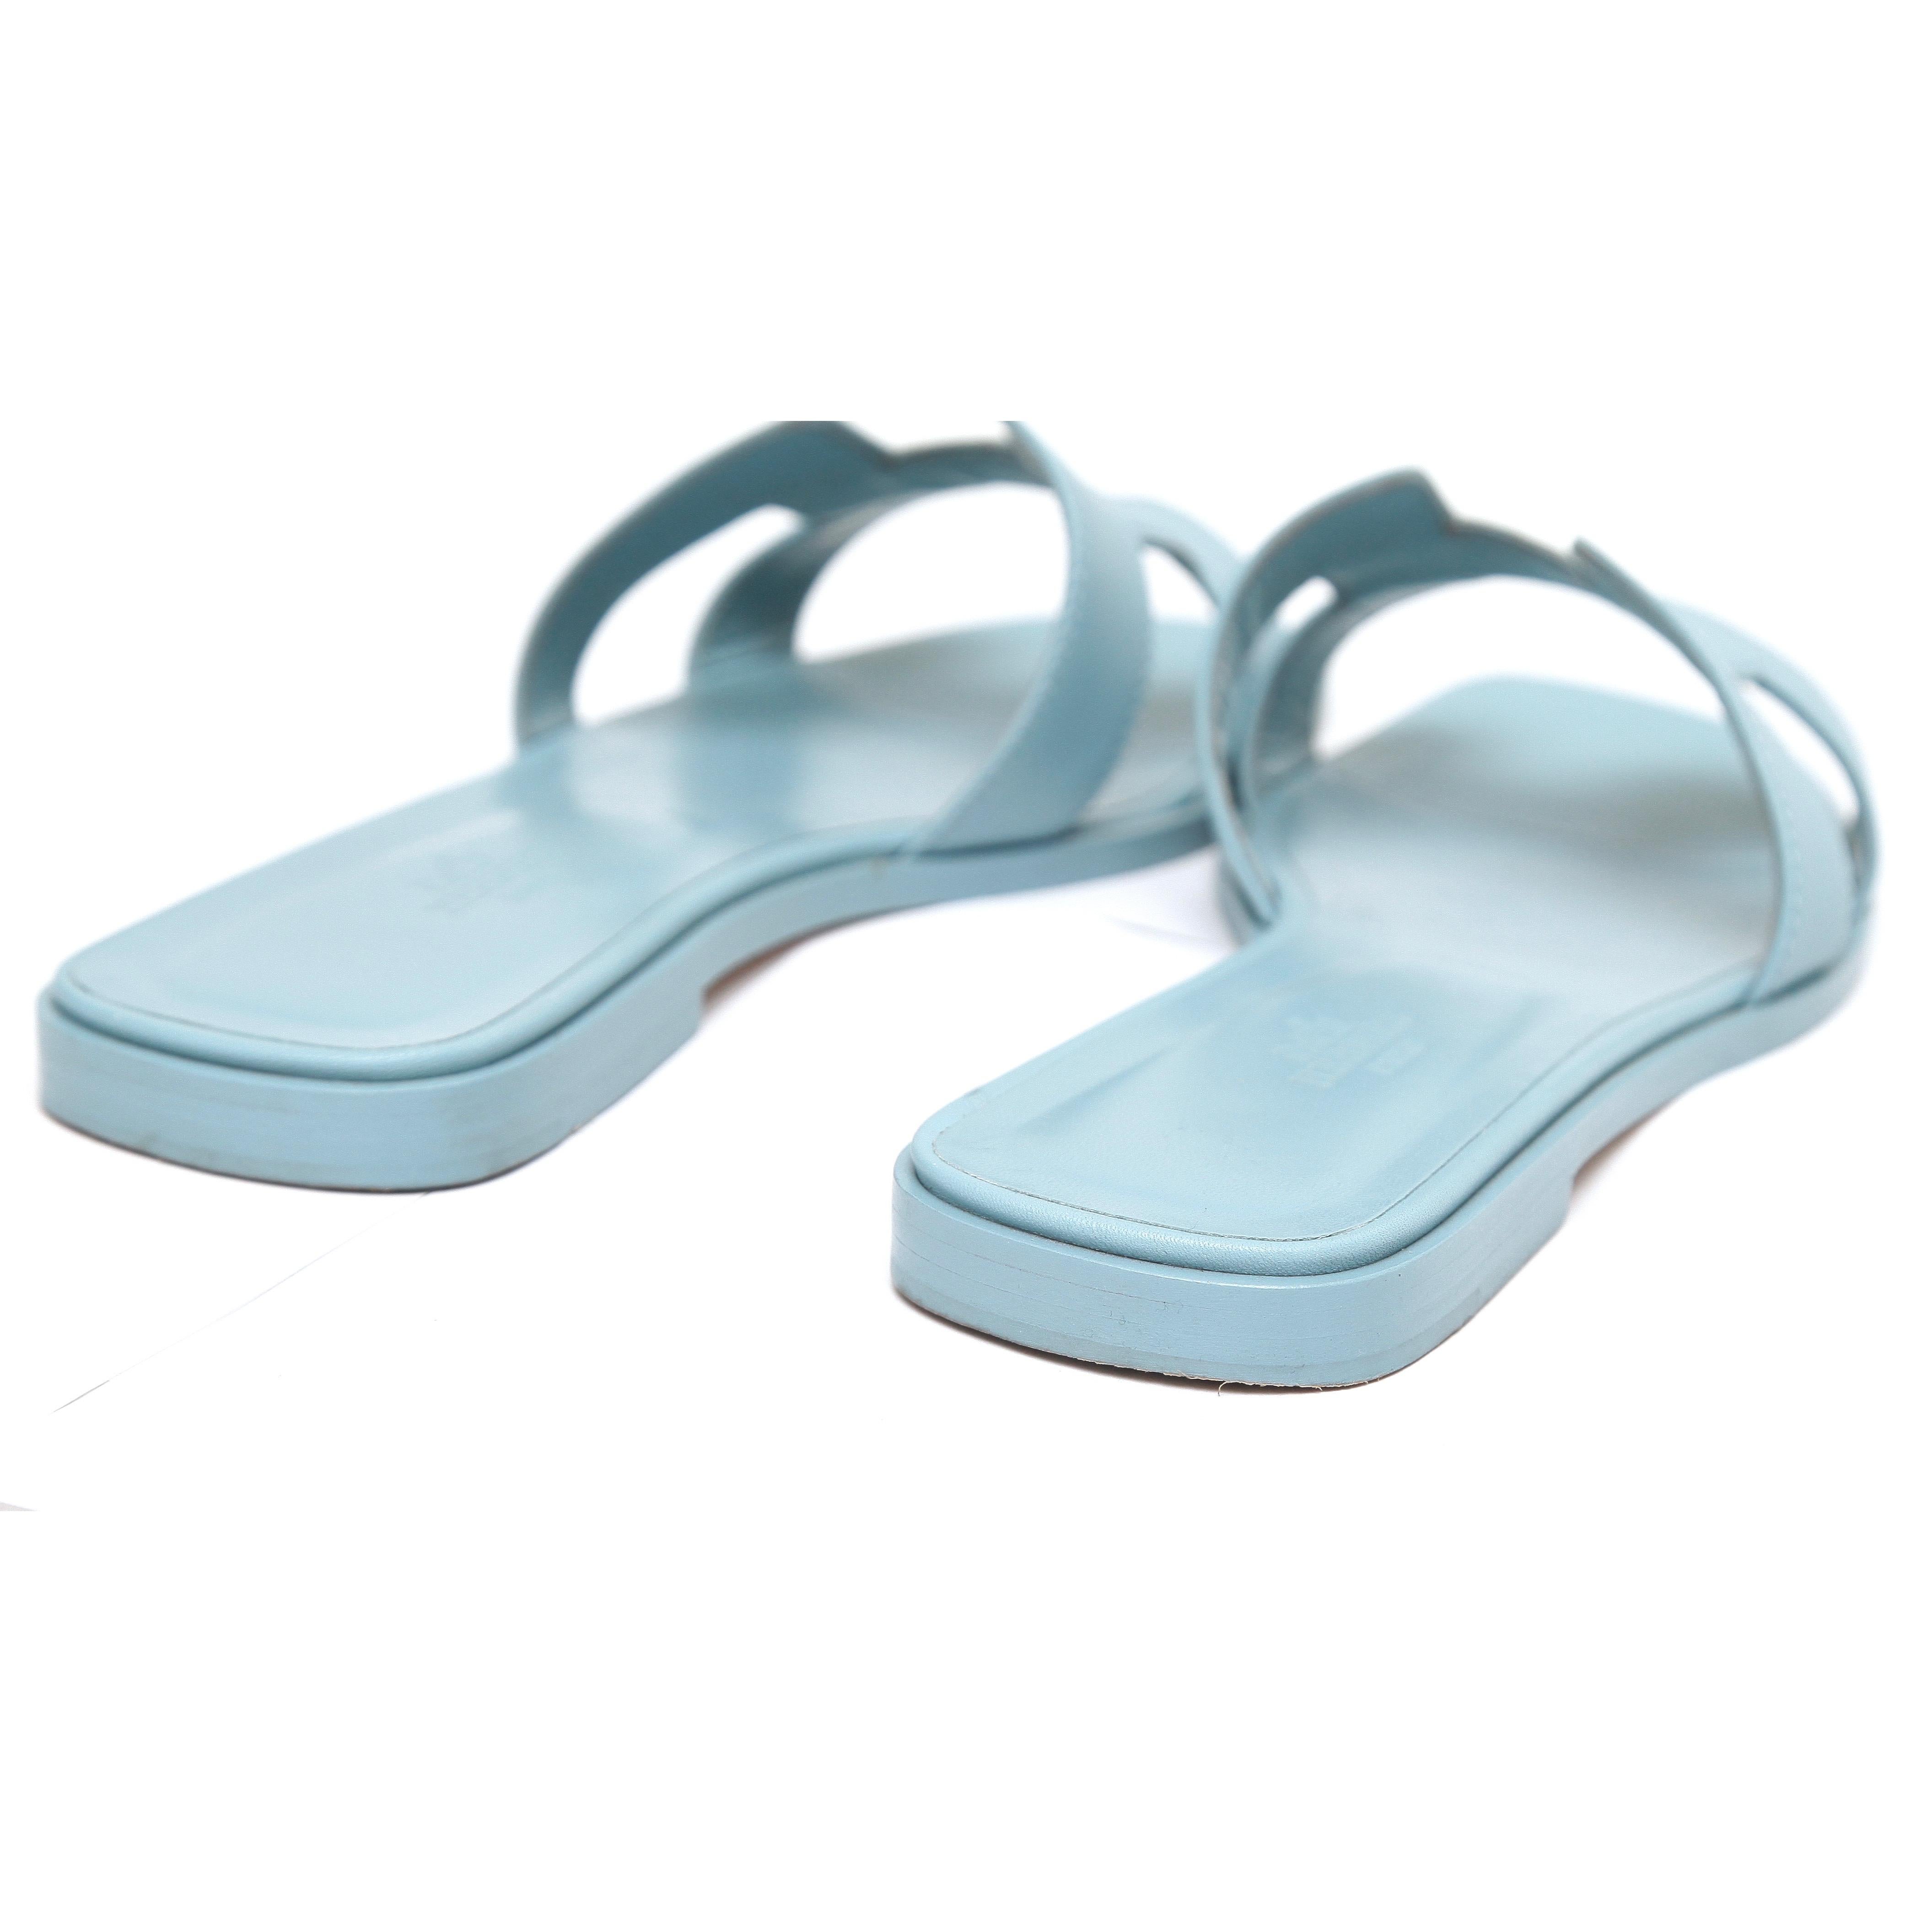 HERMES Blue Leather Slides ORAN Sandals Flat Mule Slip On Shoes Sz 38 4